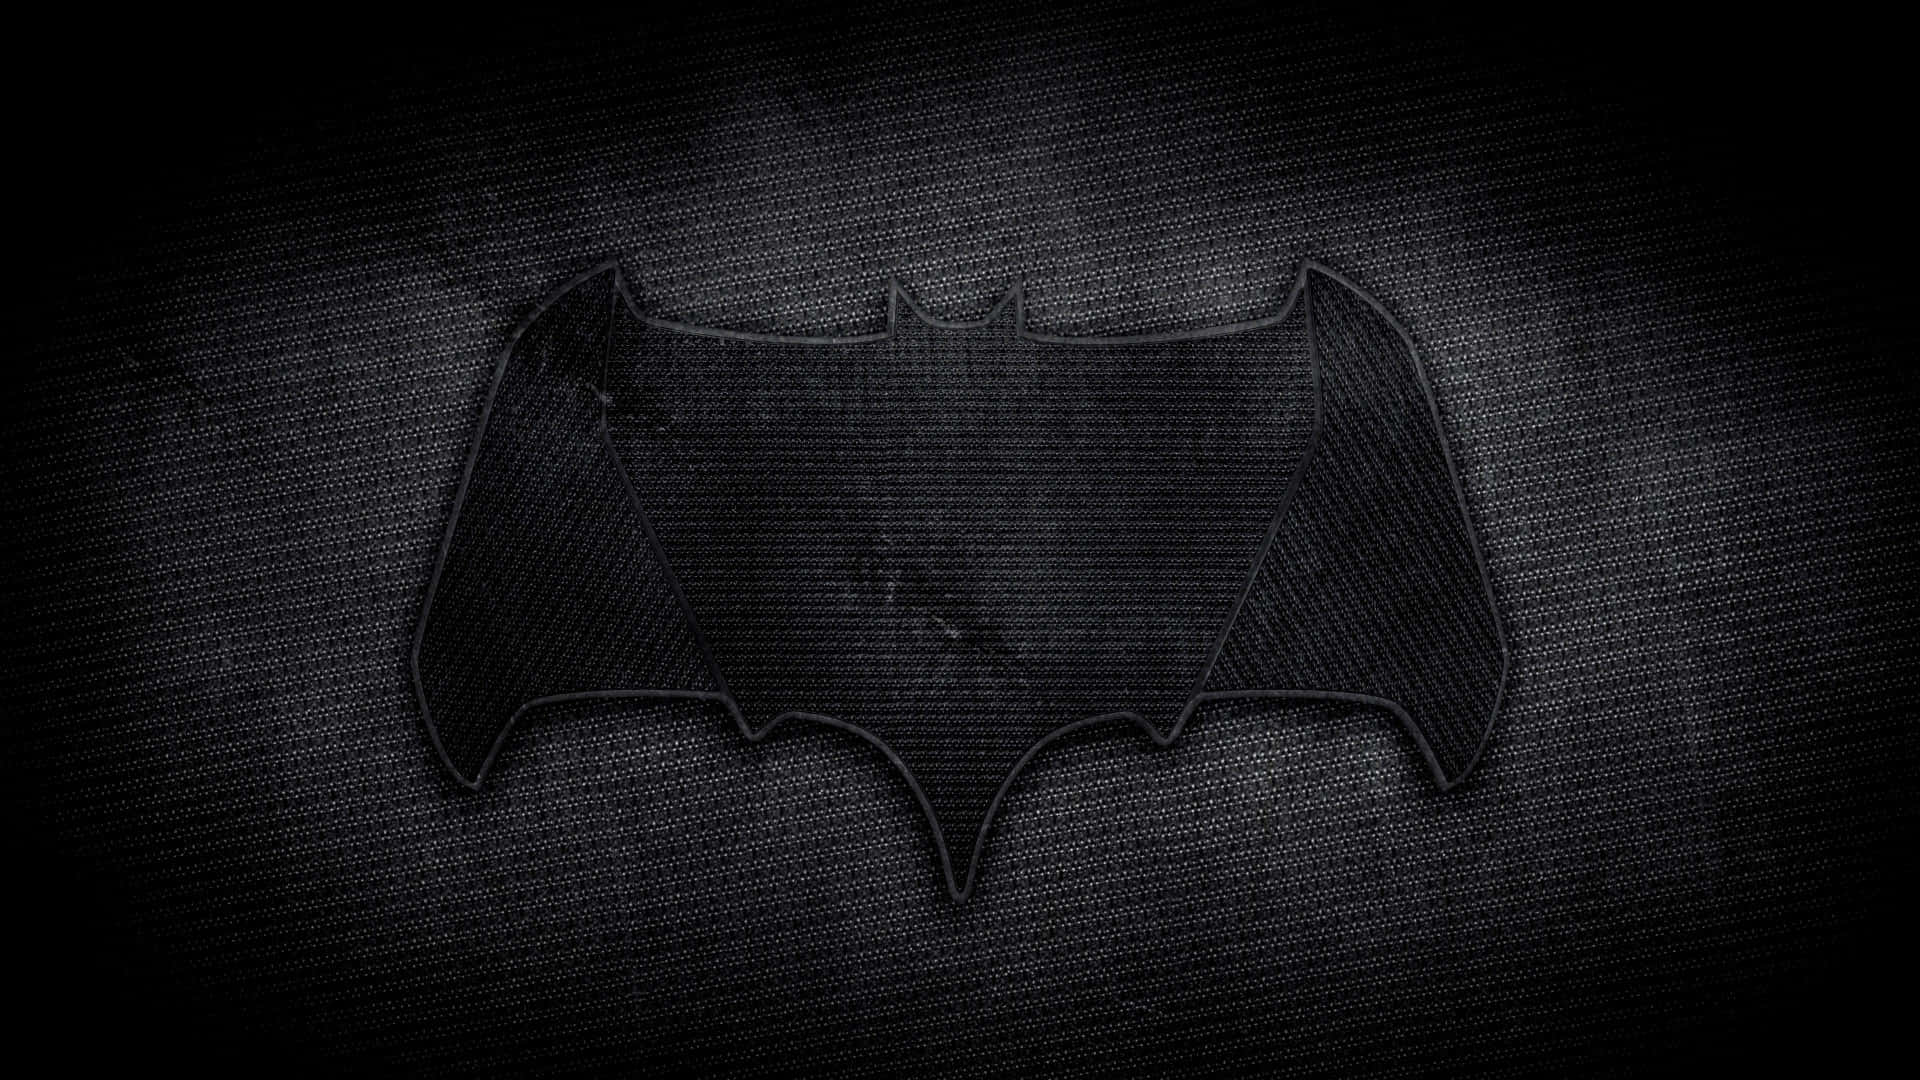 The Majestic Bat Background